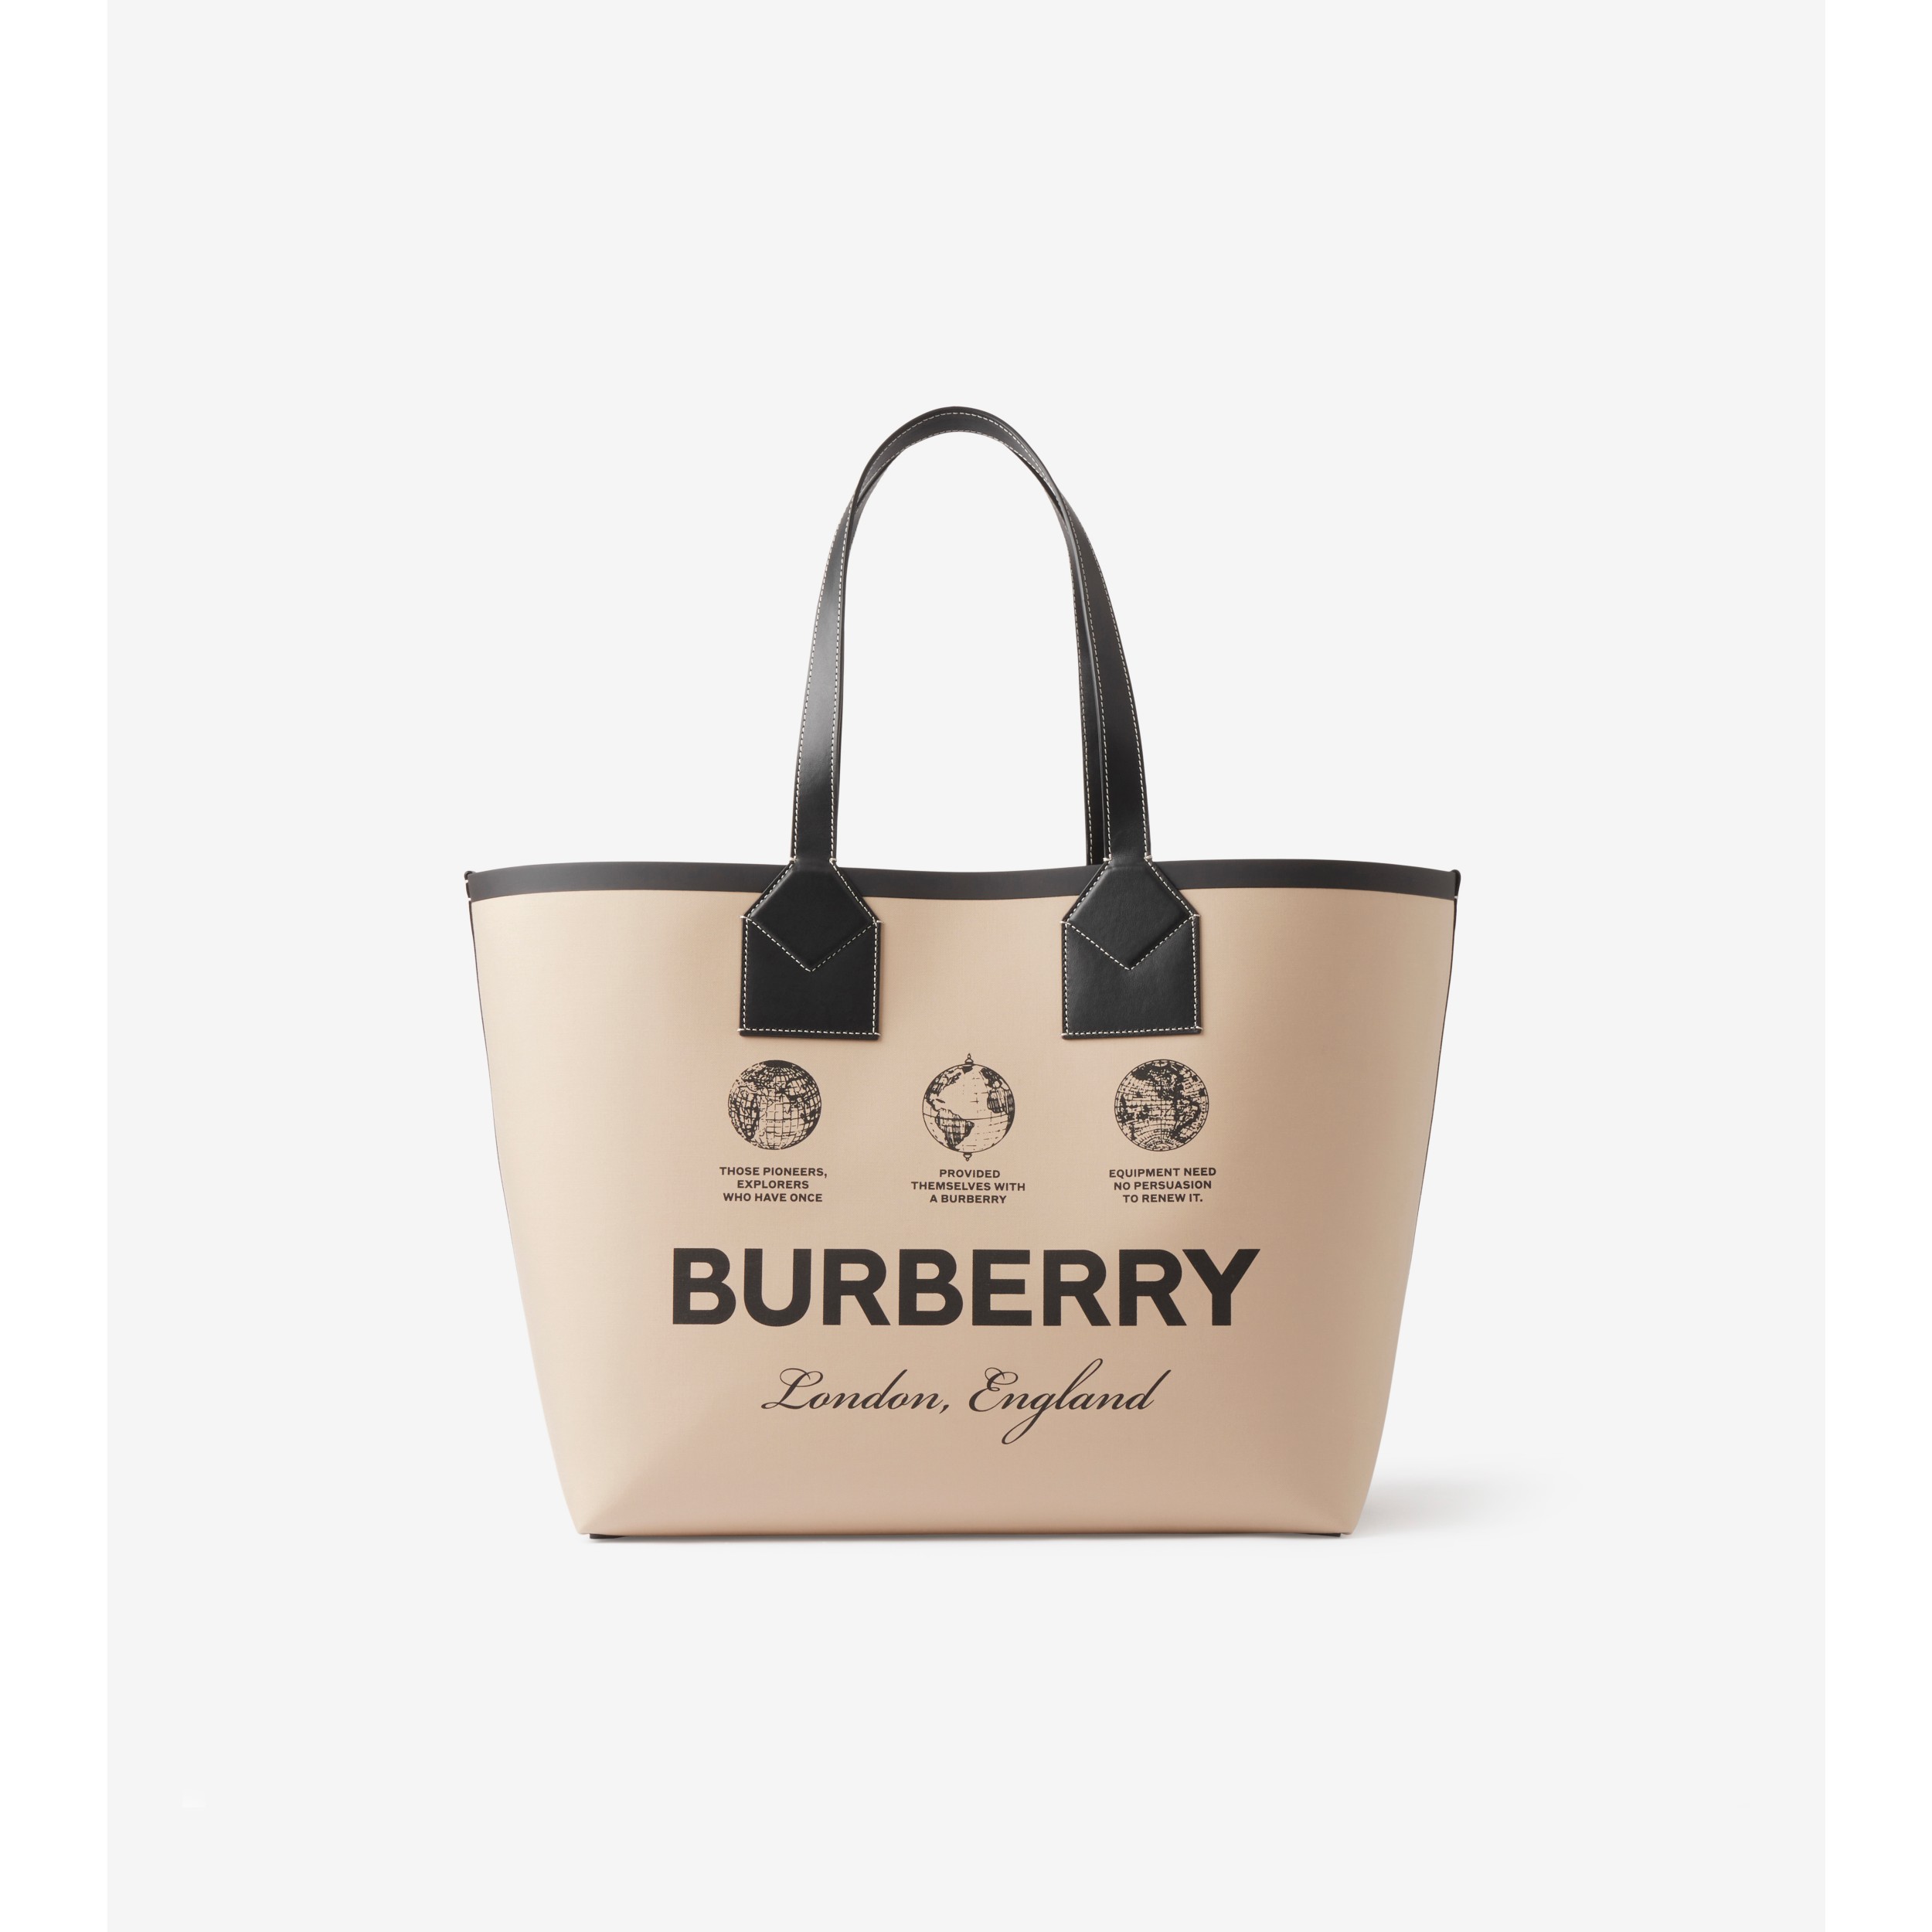 Burberry London Tote Bag Switzerland, SAVE 46% 